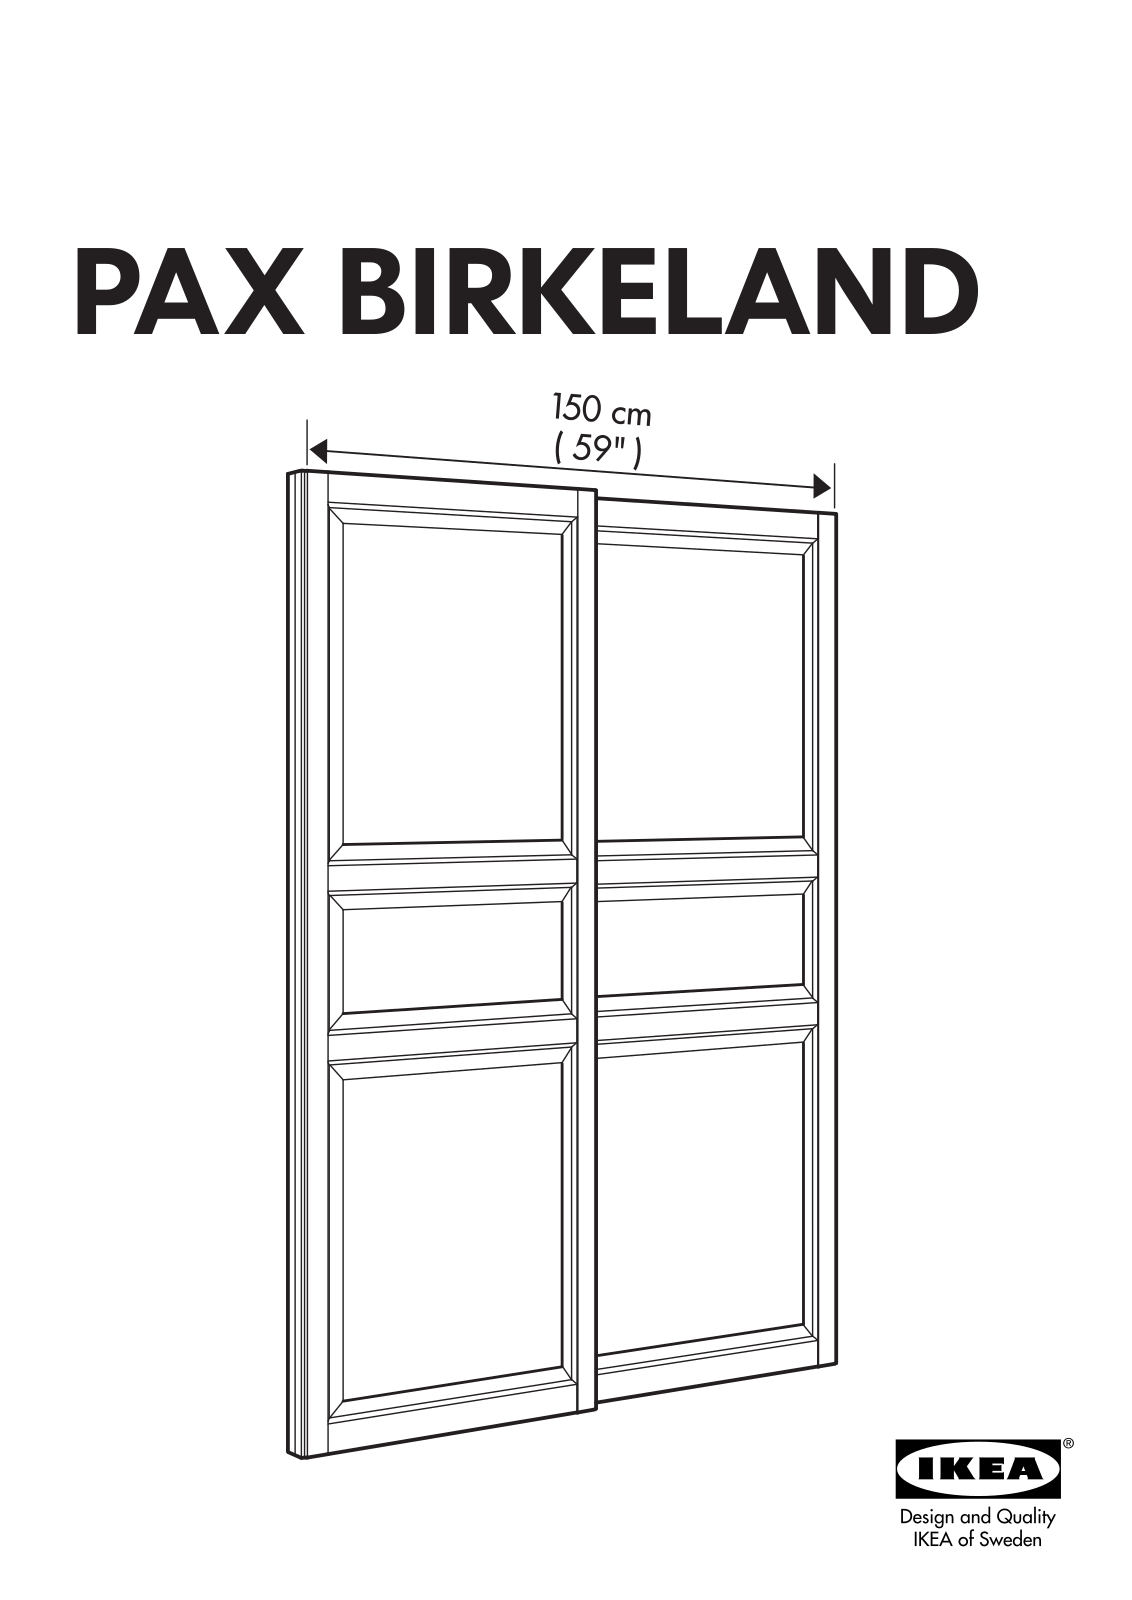 IKEA PAX BIRKELAND SLIDING DOOR 59X93 Assembly Instruction